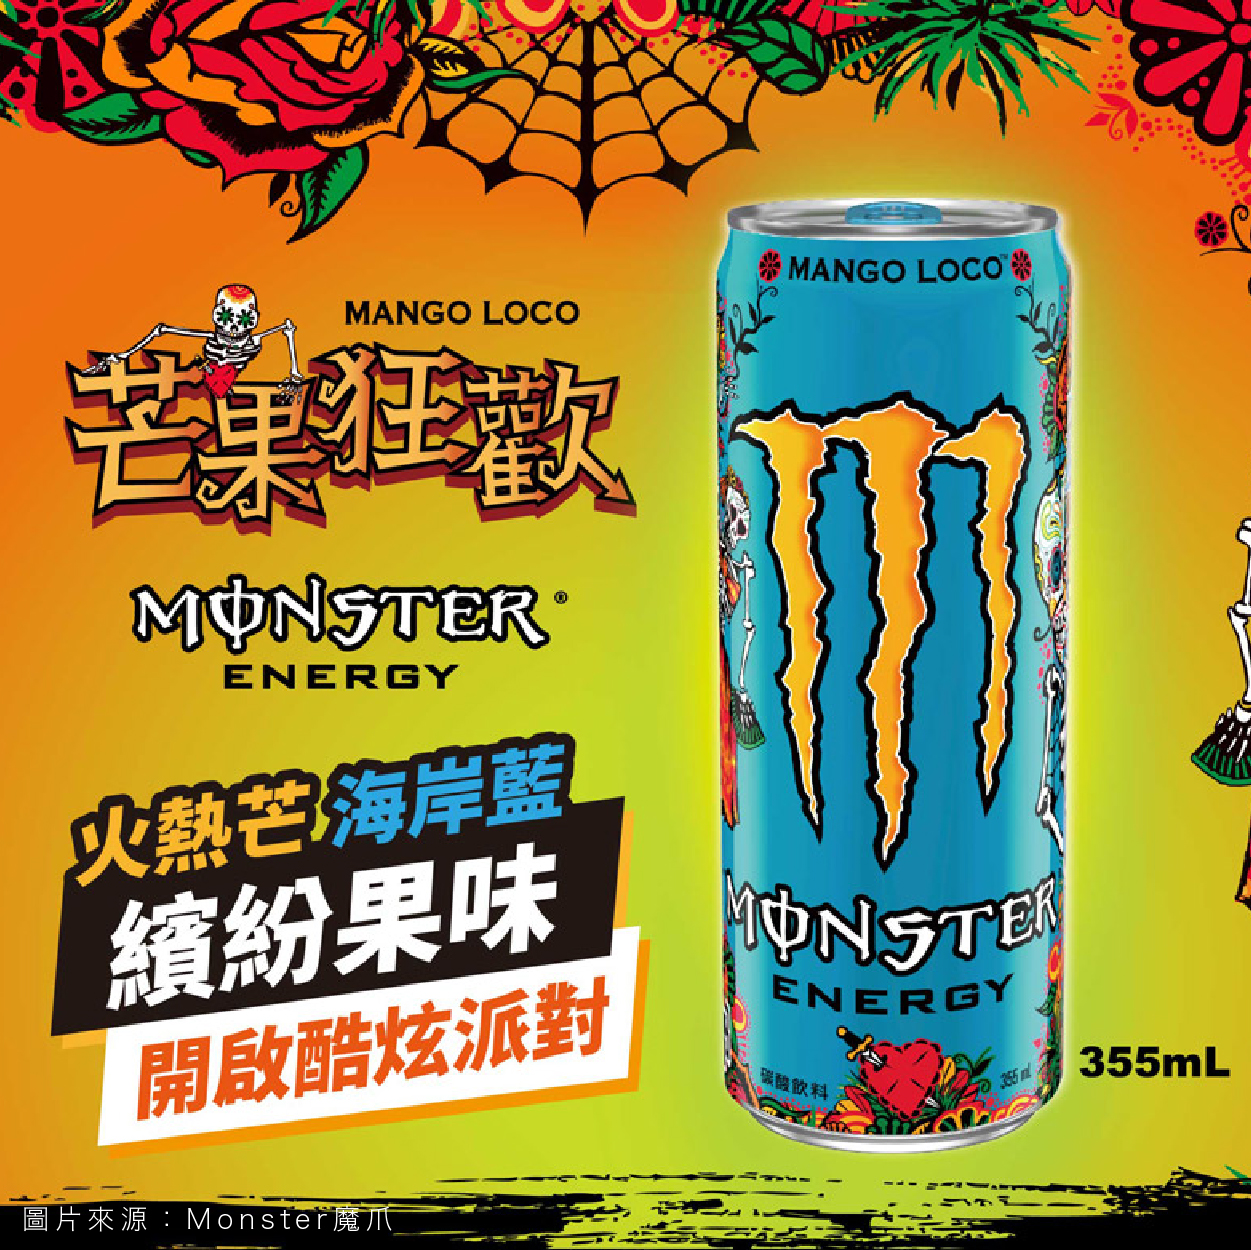 Monster魔爪 芒果狂歡能量碳酸飲料  為您補充超能量